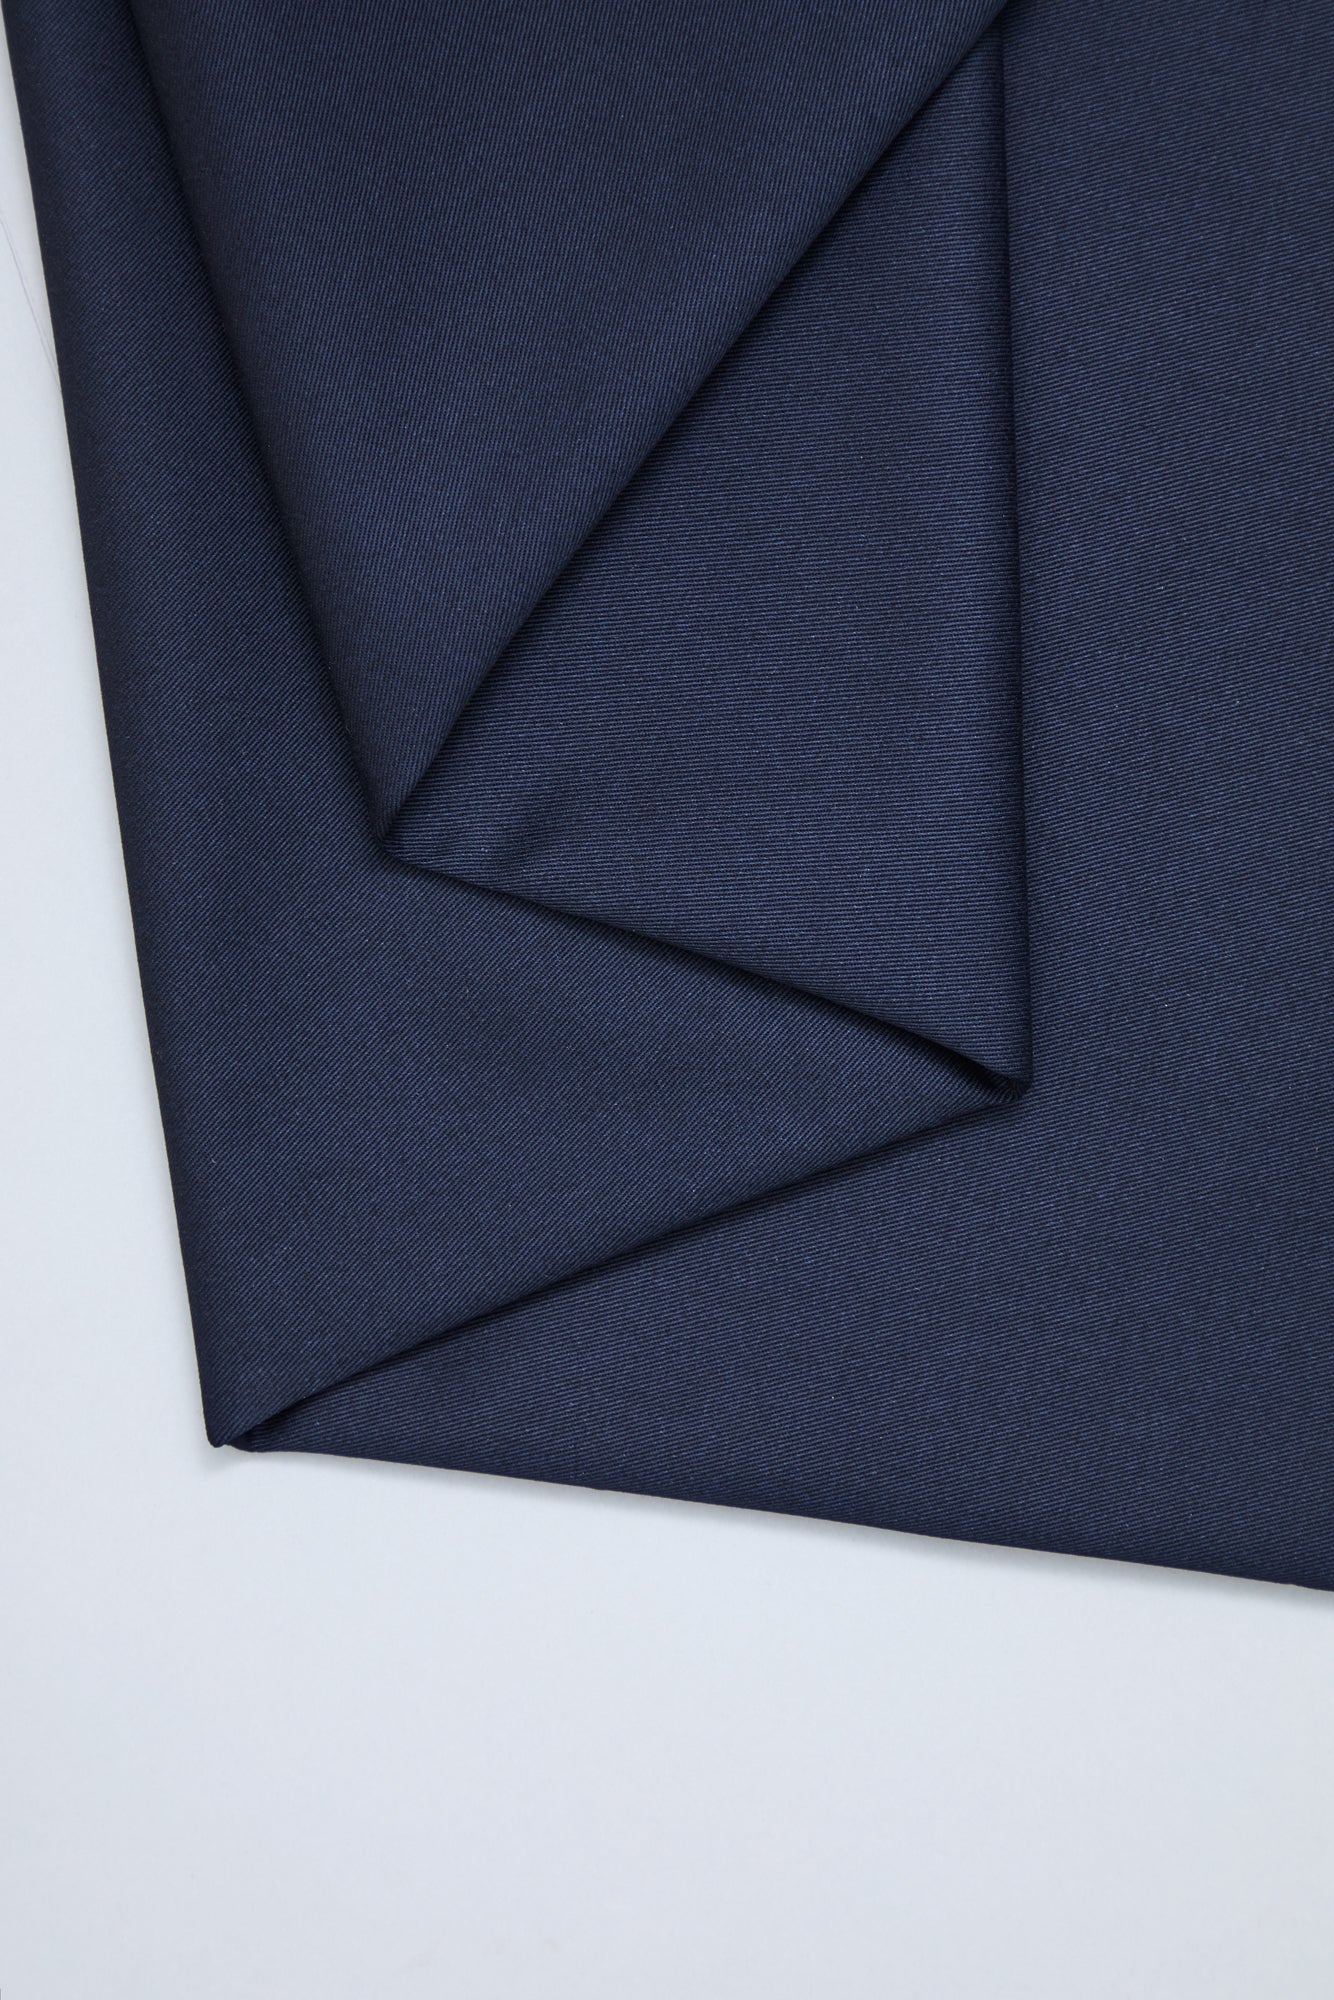 Flat lay of organic cotton twill sewing fabric in indigo night, navy